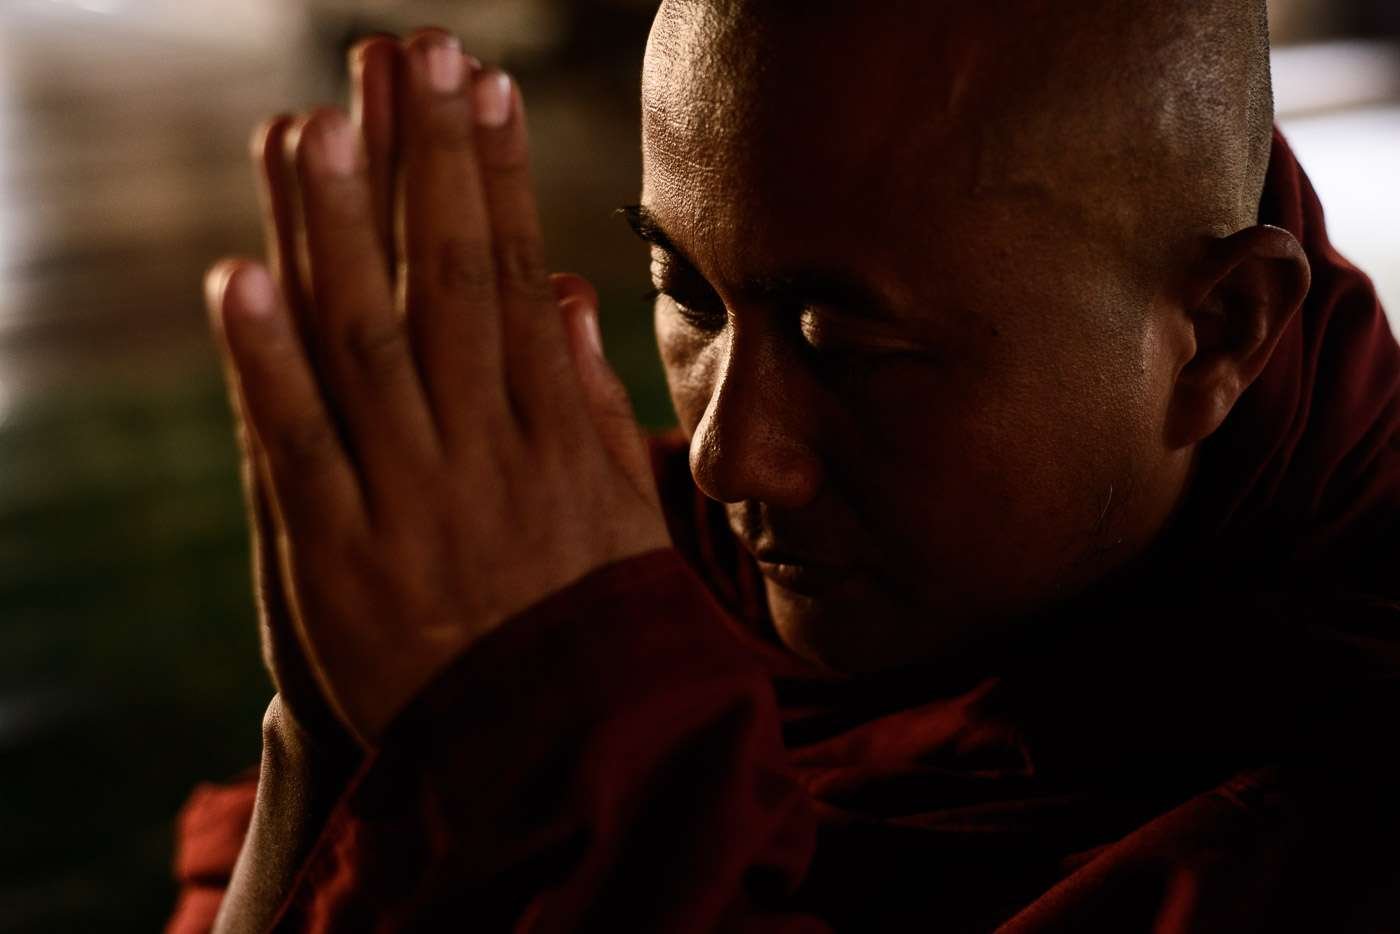 A monk at prayer.